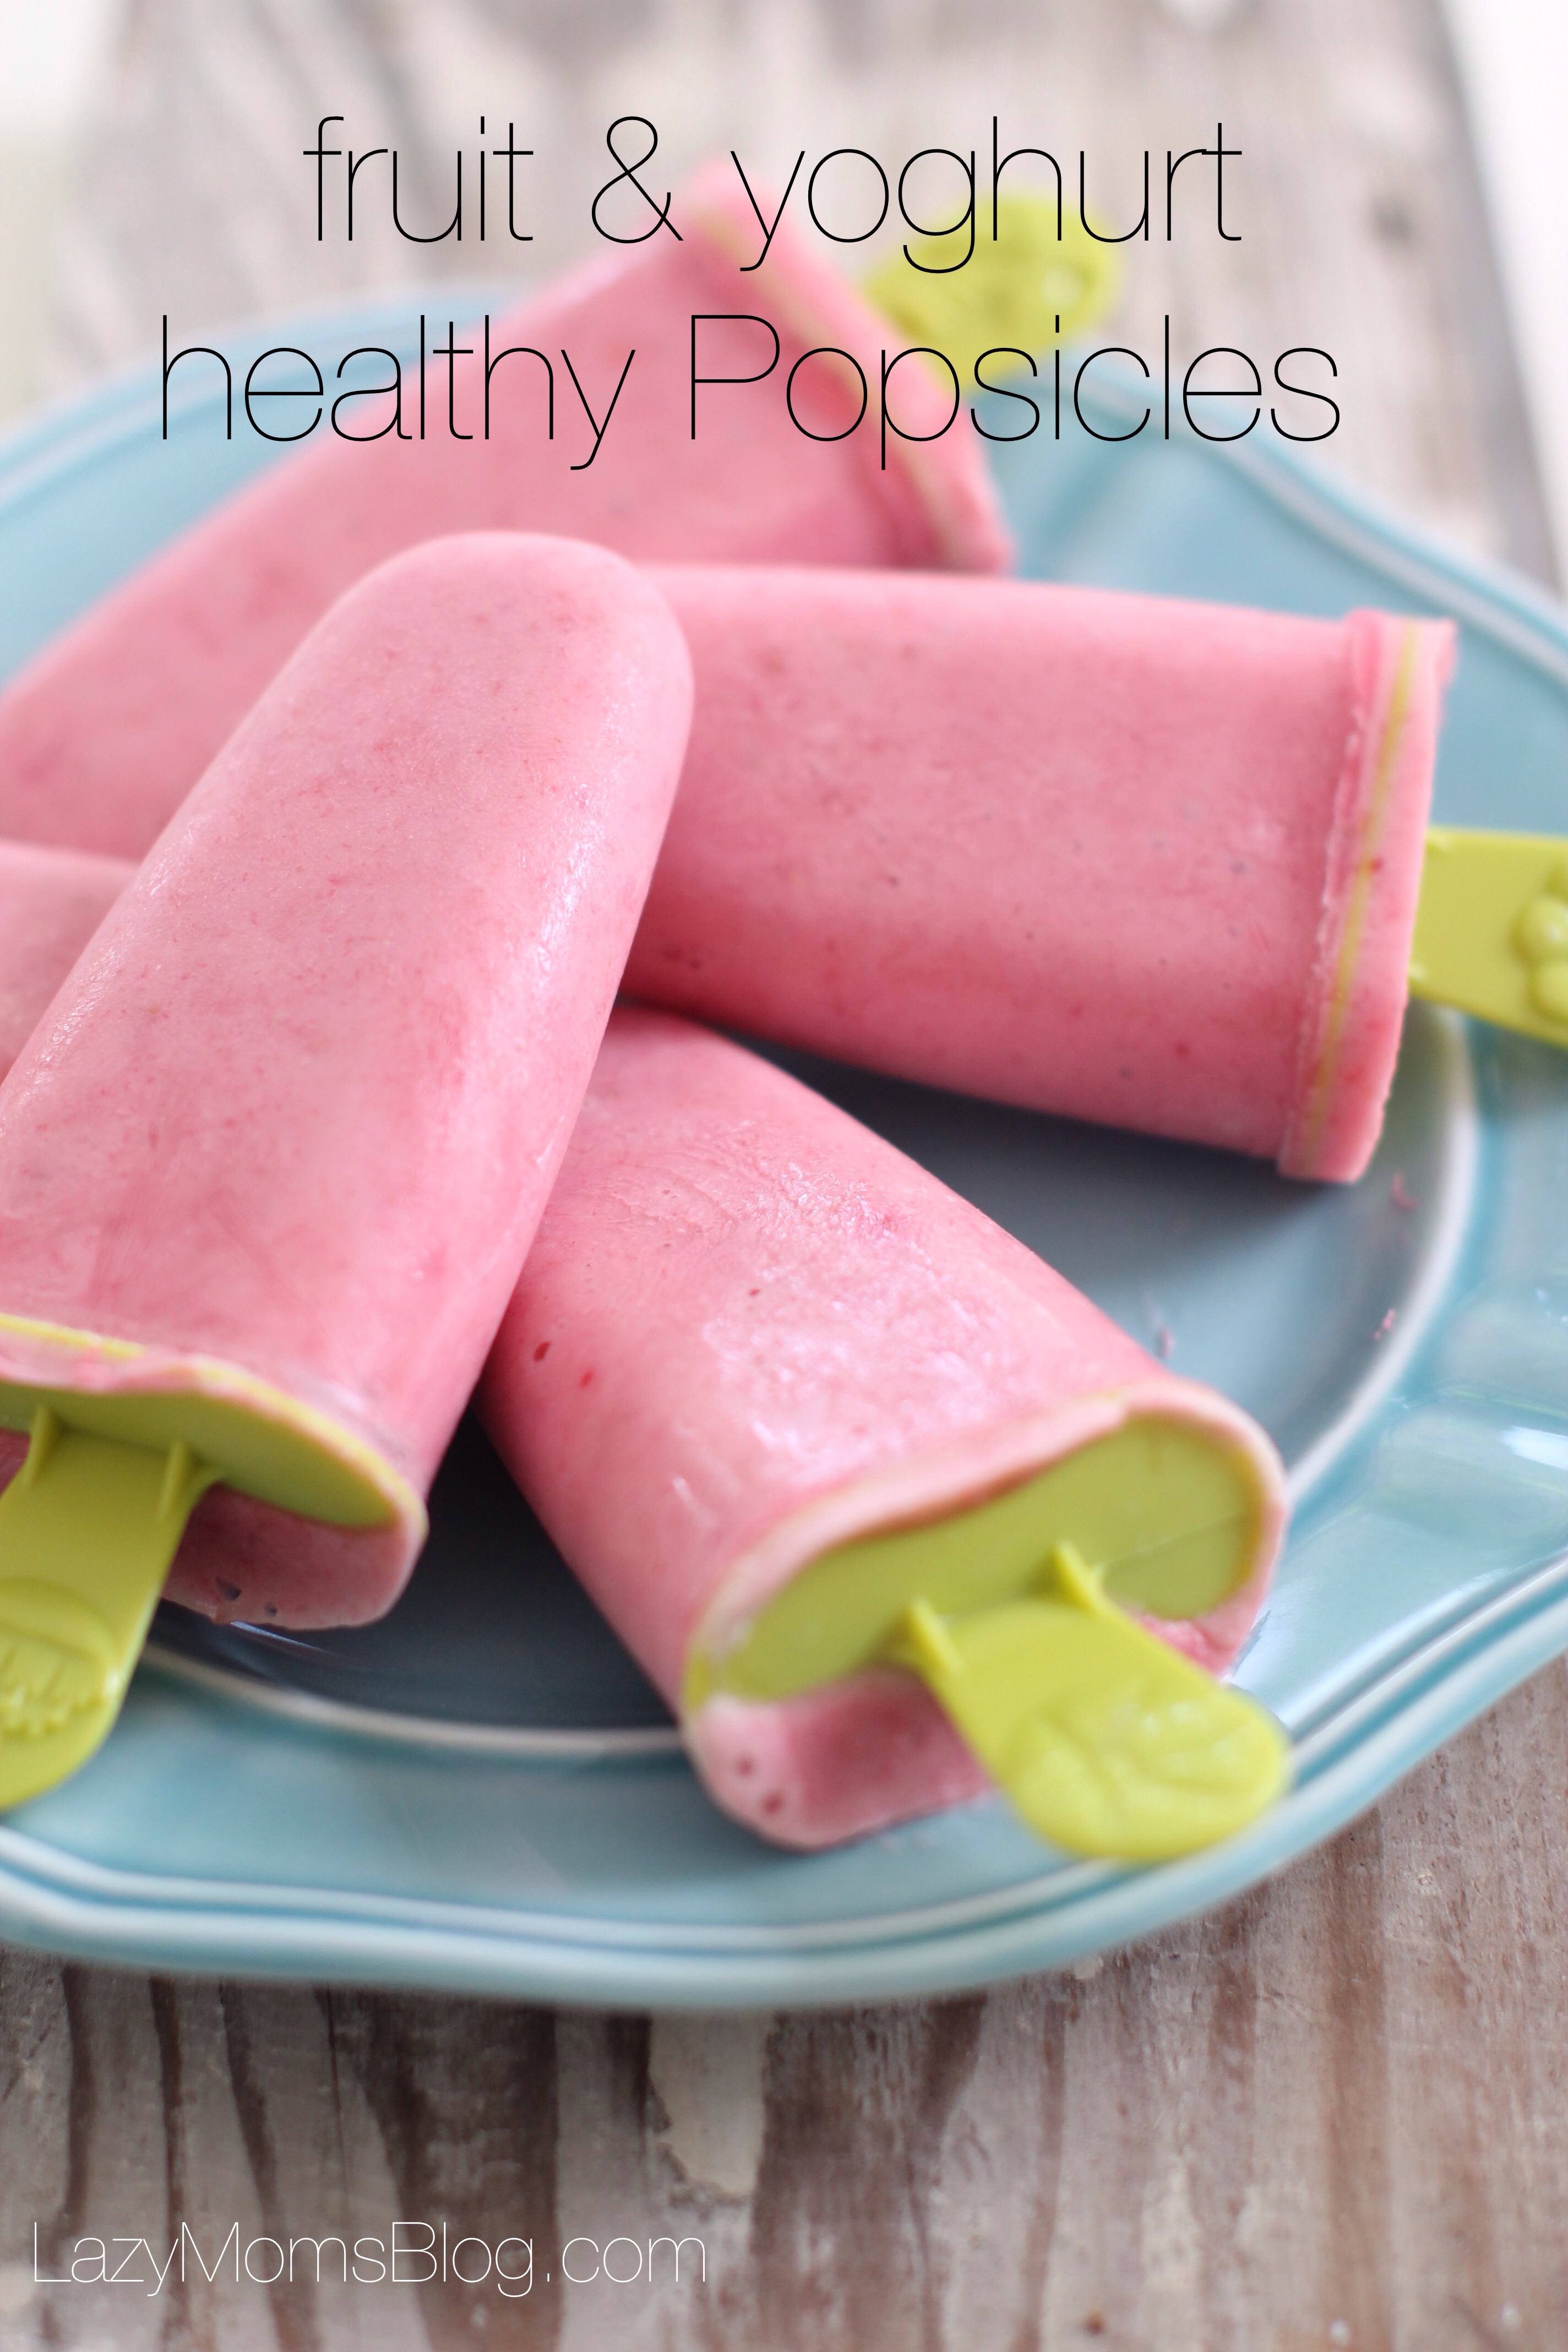 Fruit & yoghurt healthy Popsicles